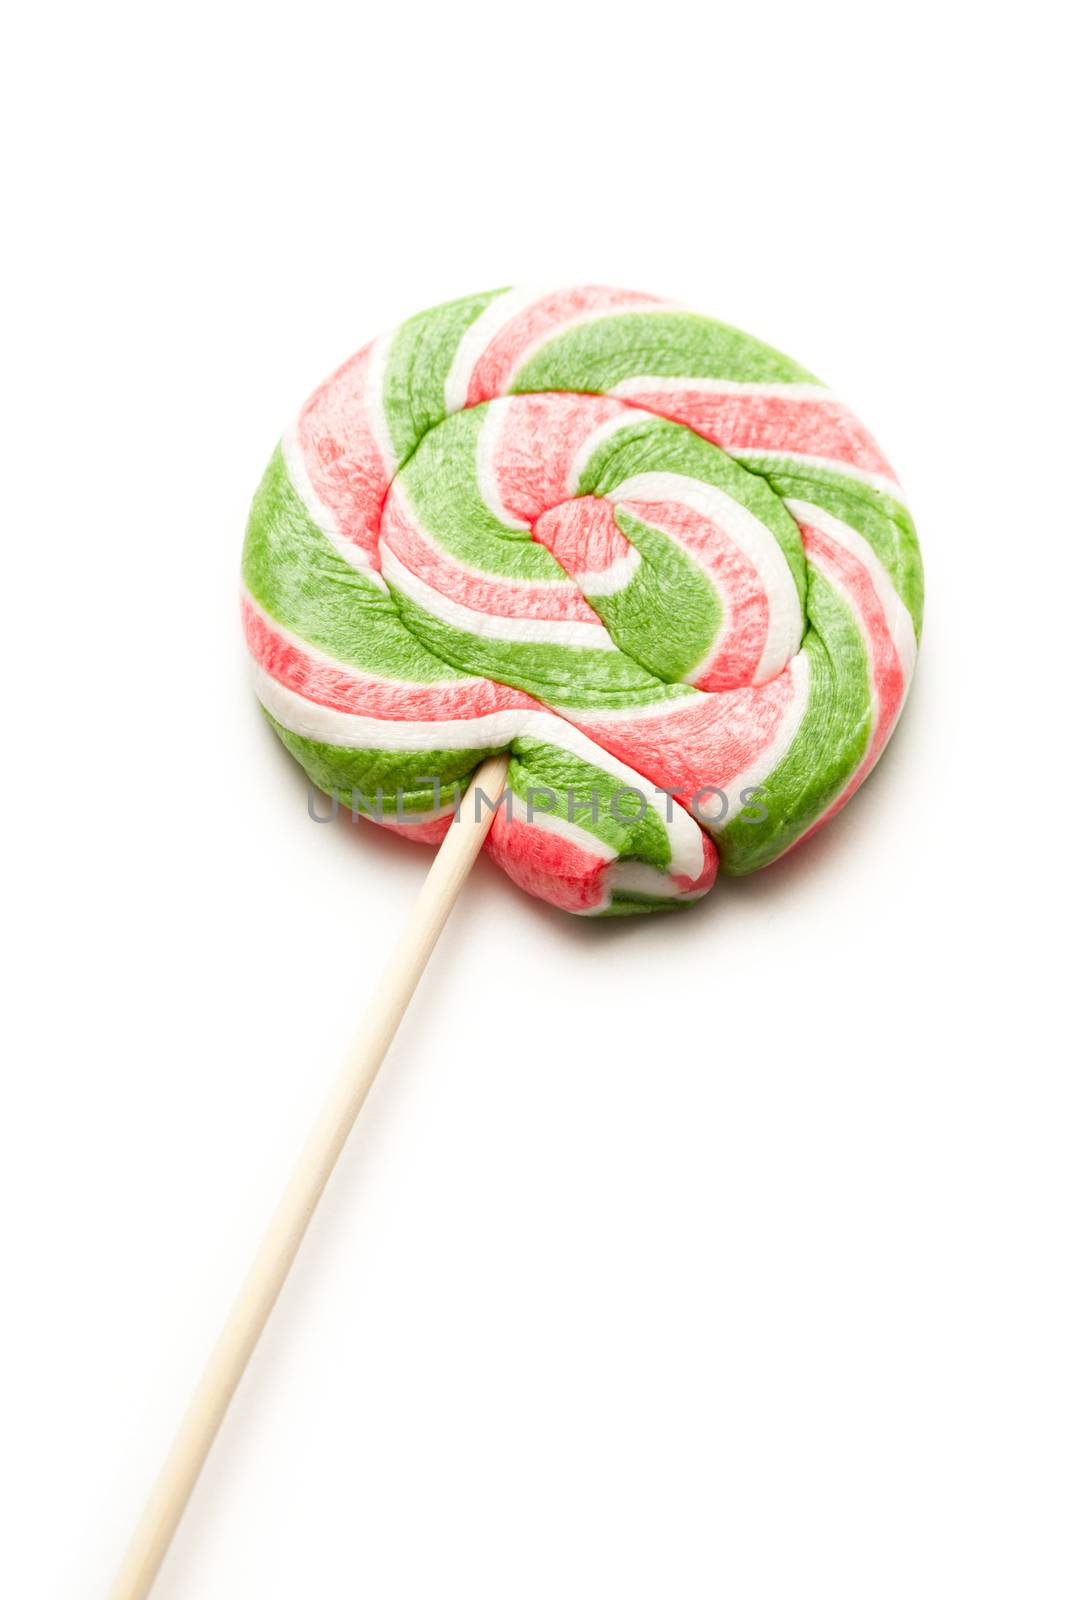 Bright lollipop candy on white background by Garsya